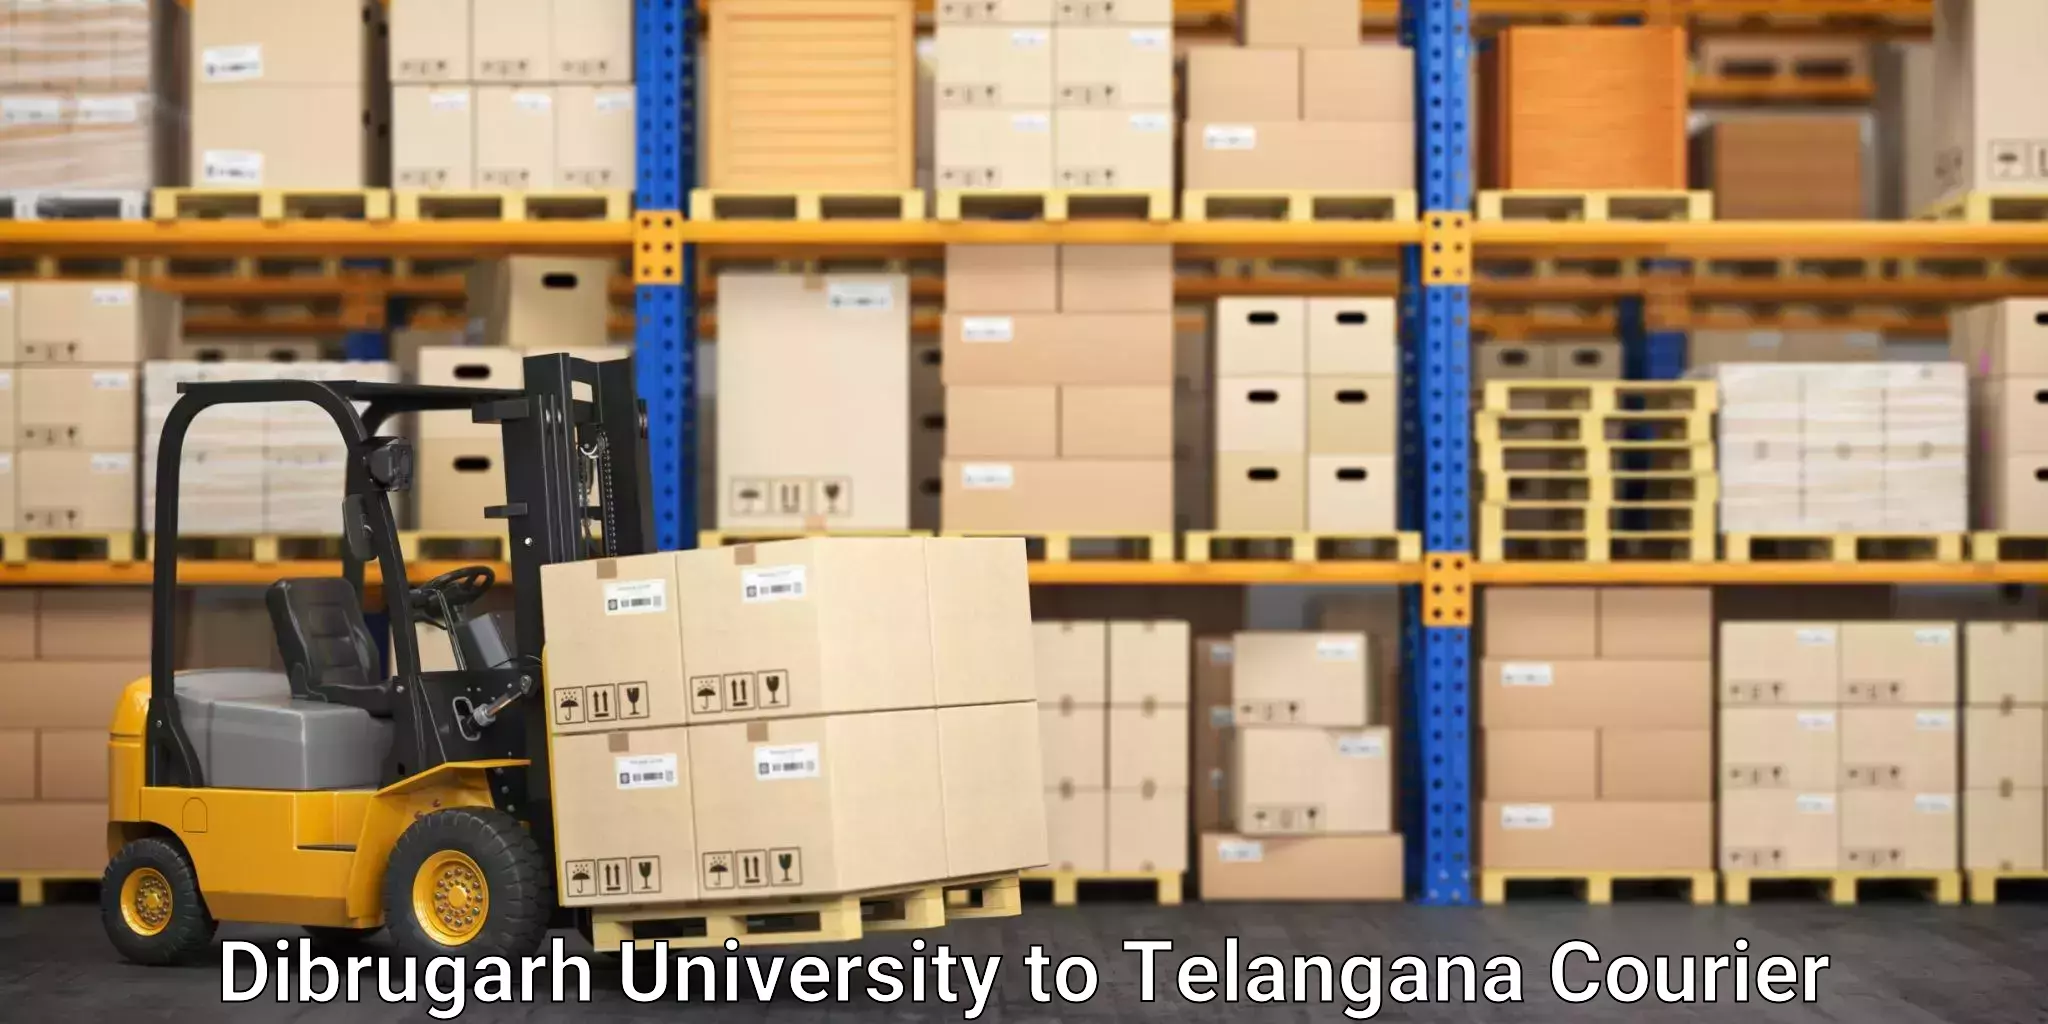 Global shipping networks Dibrugarh University to Aswaraopeta